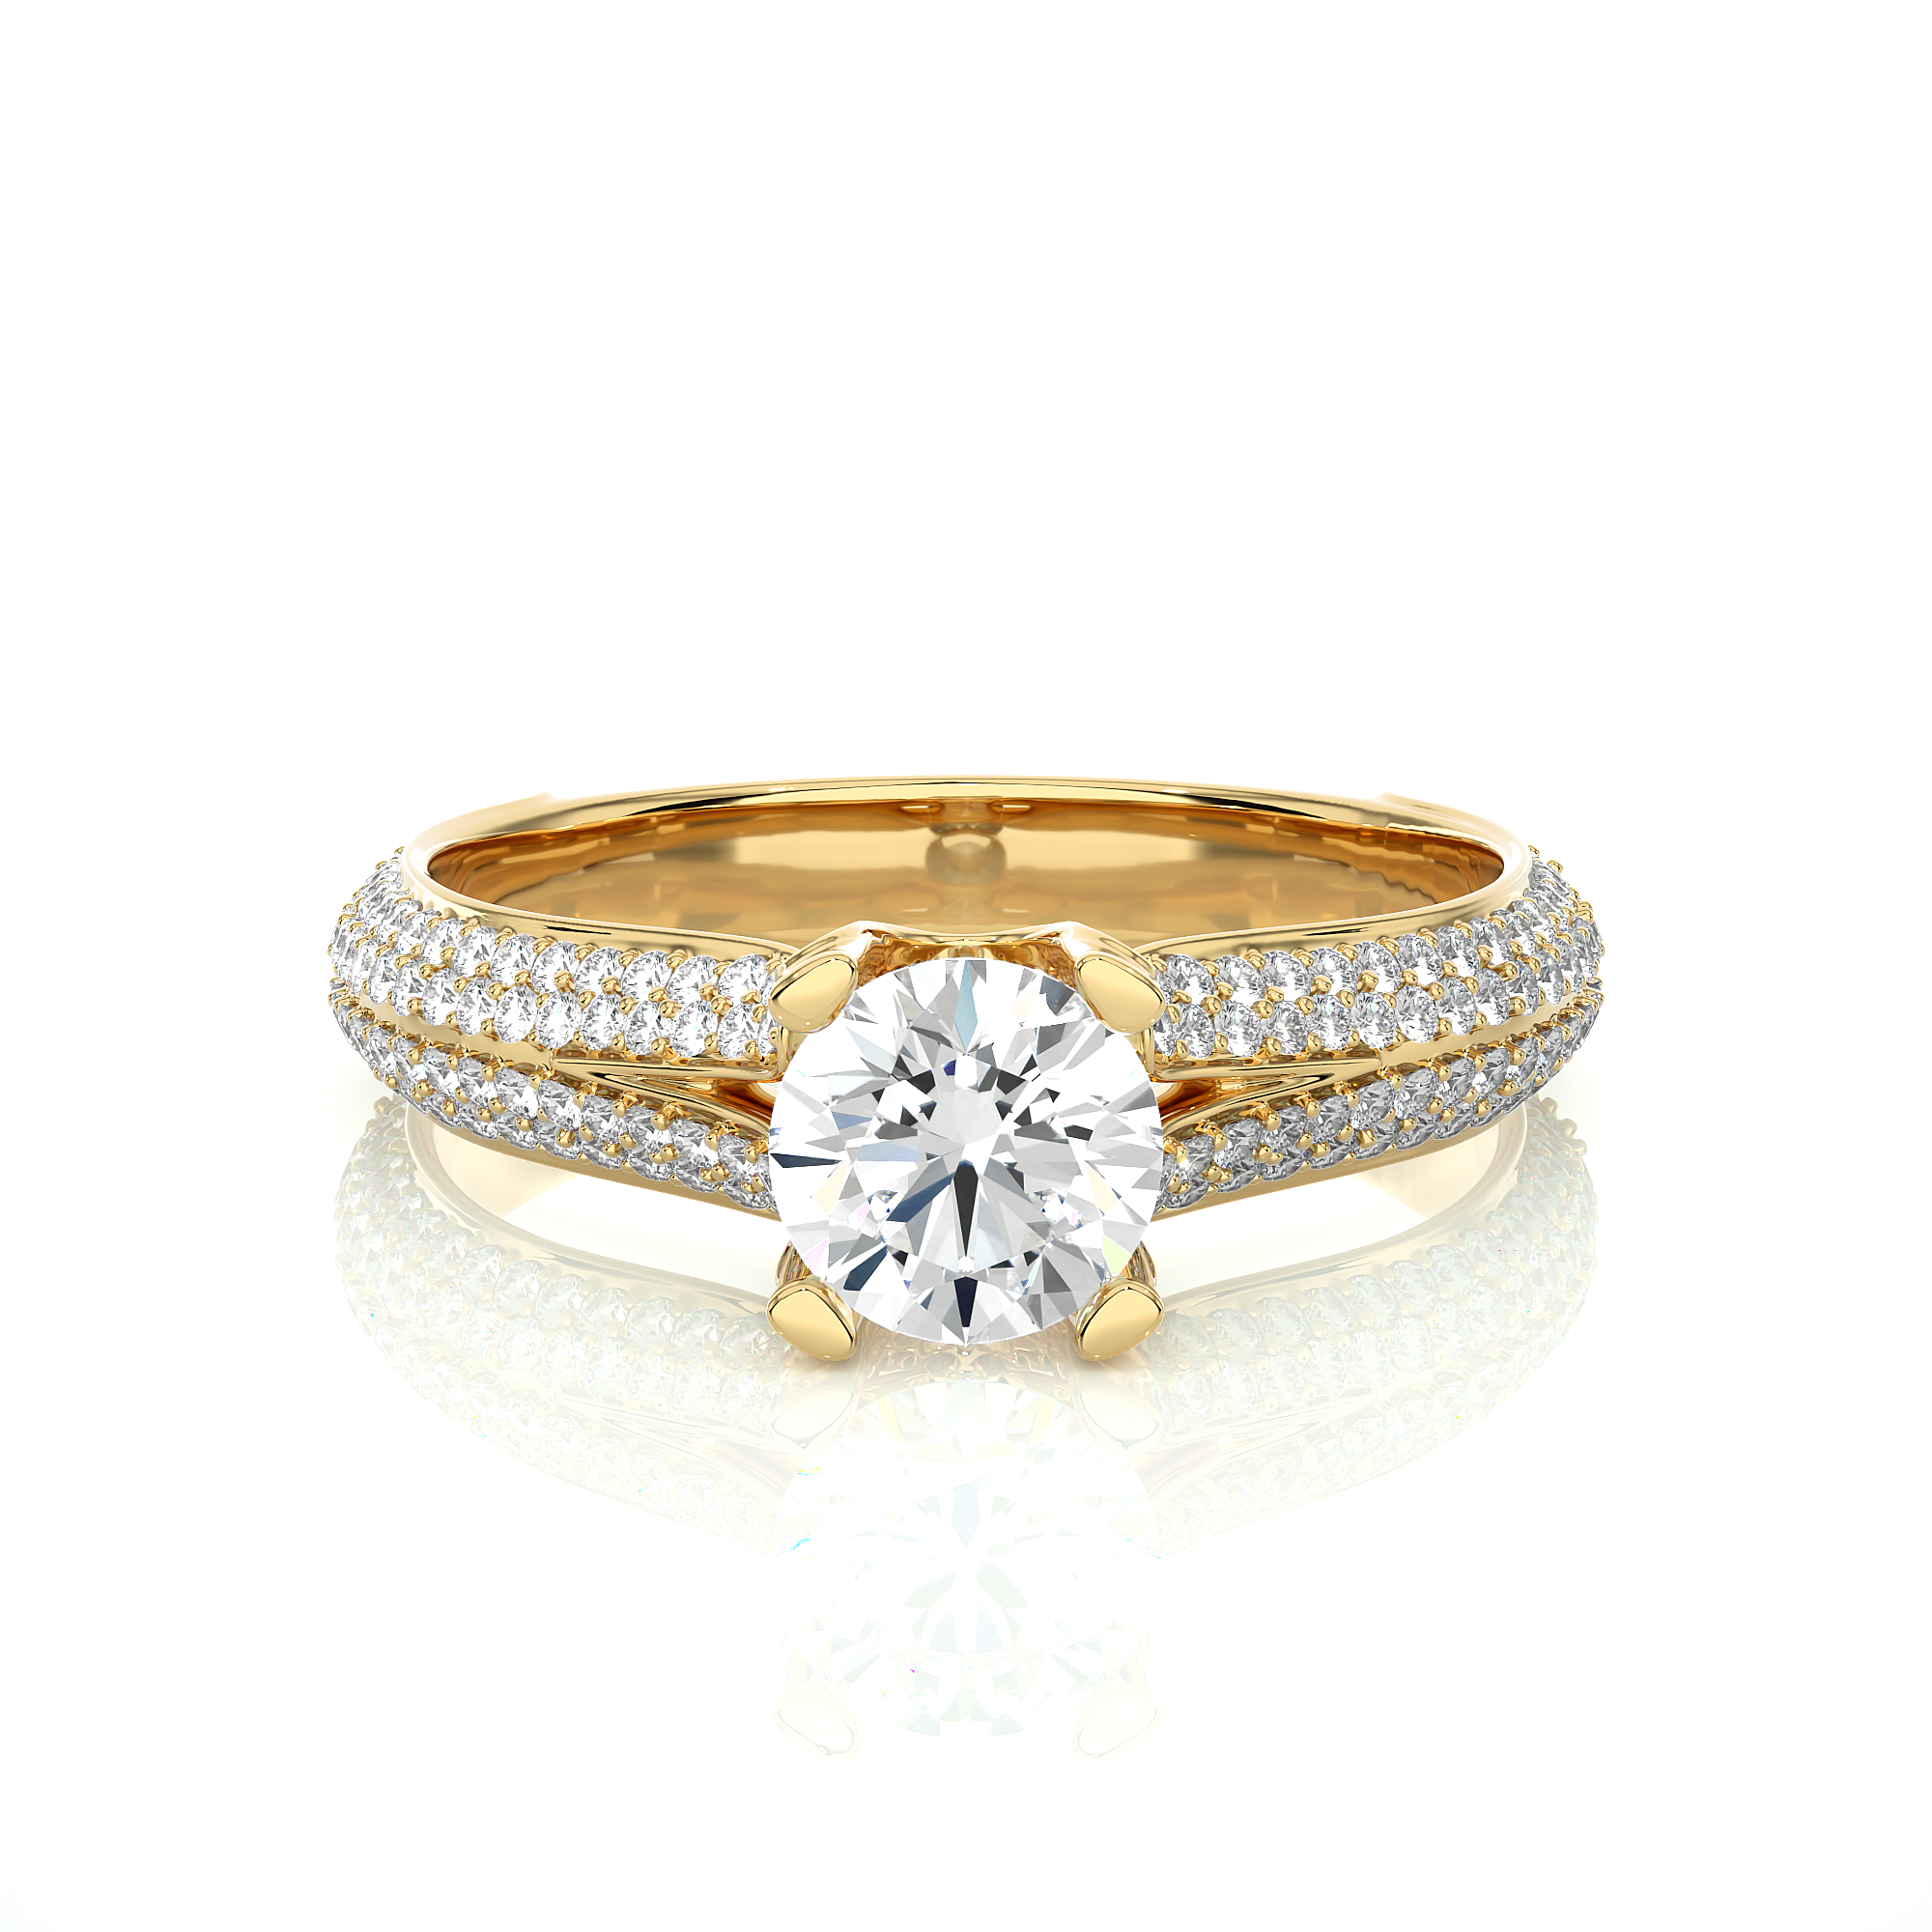 Elanor Ring - Solitaire Diamond Ring